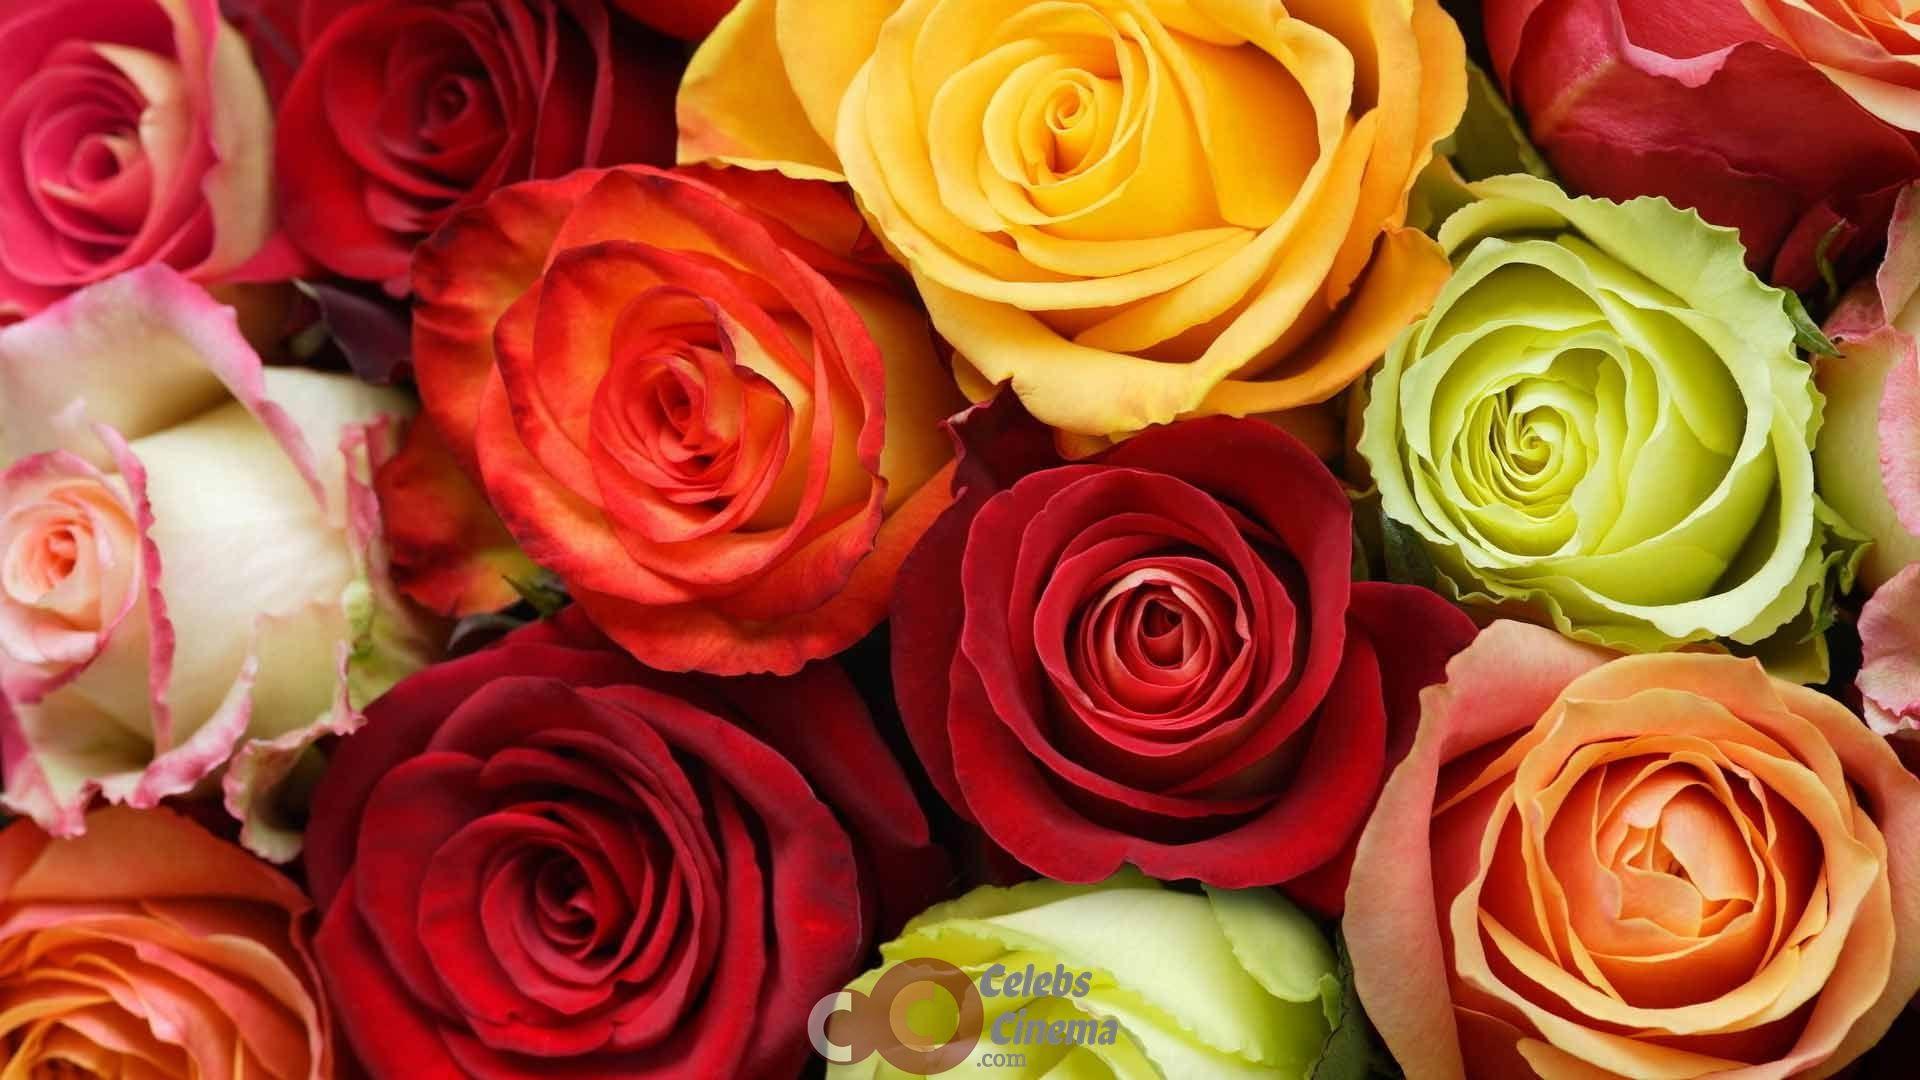 Rose Day Image